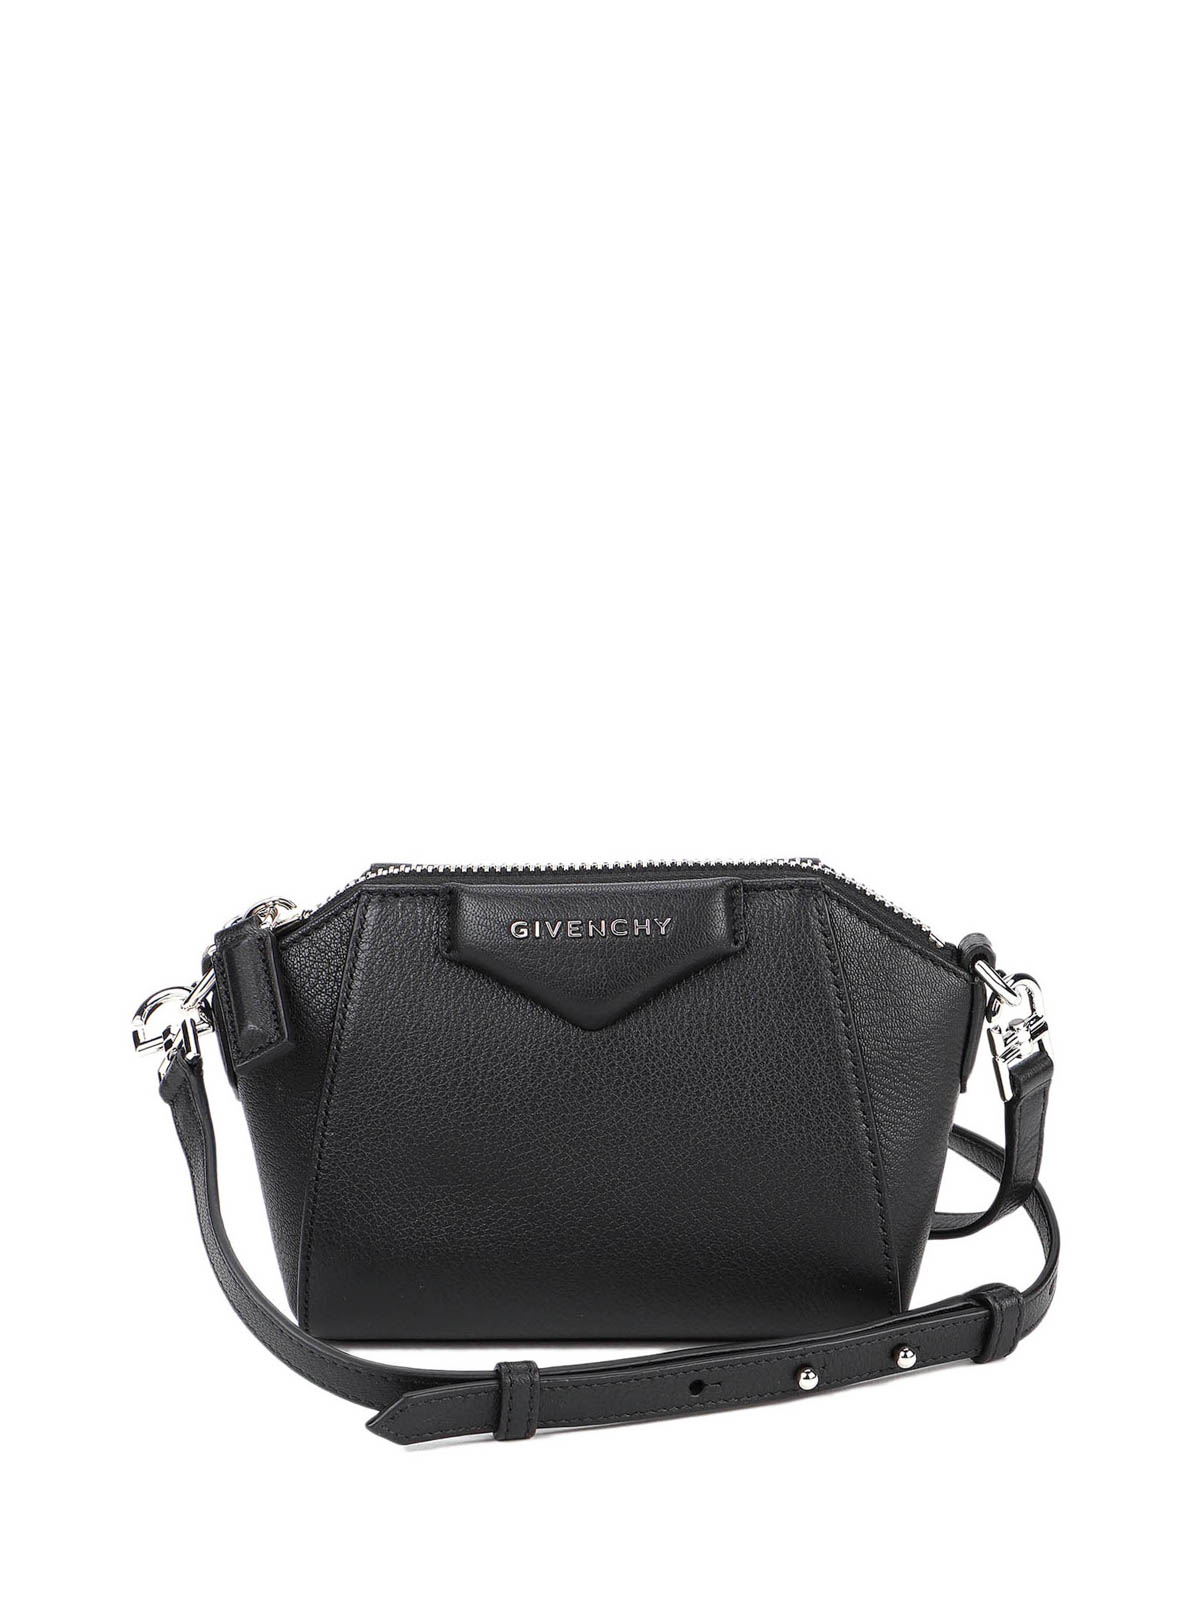 Givenchy Antigona Nano Leather Crossbody Bag in Black